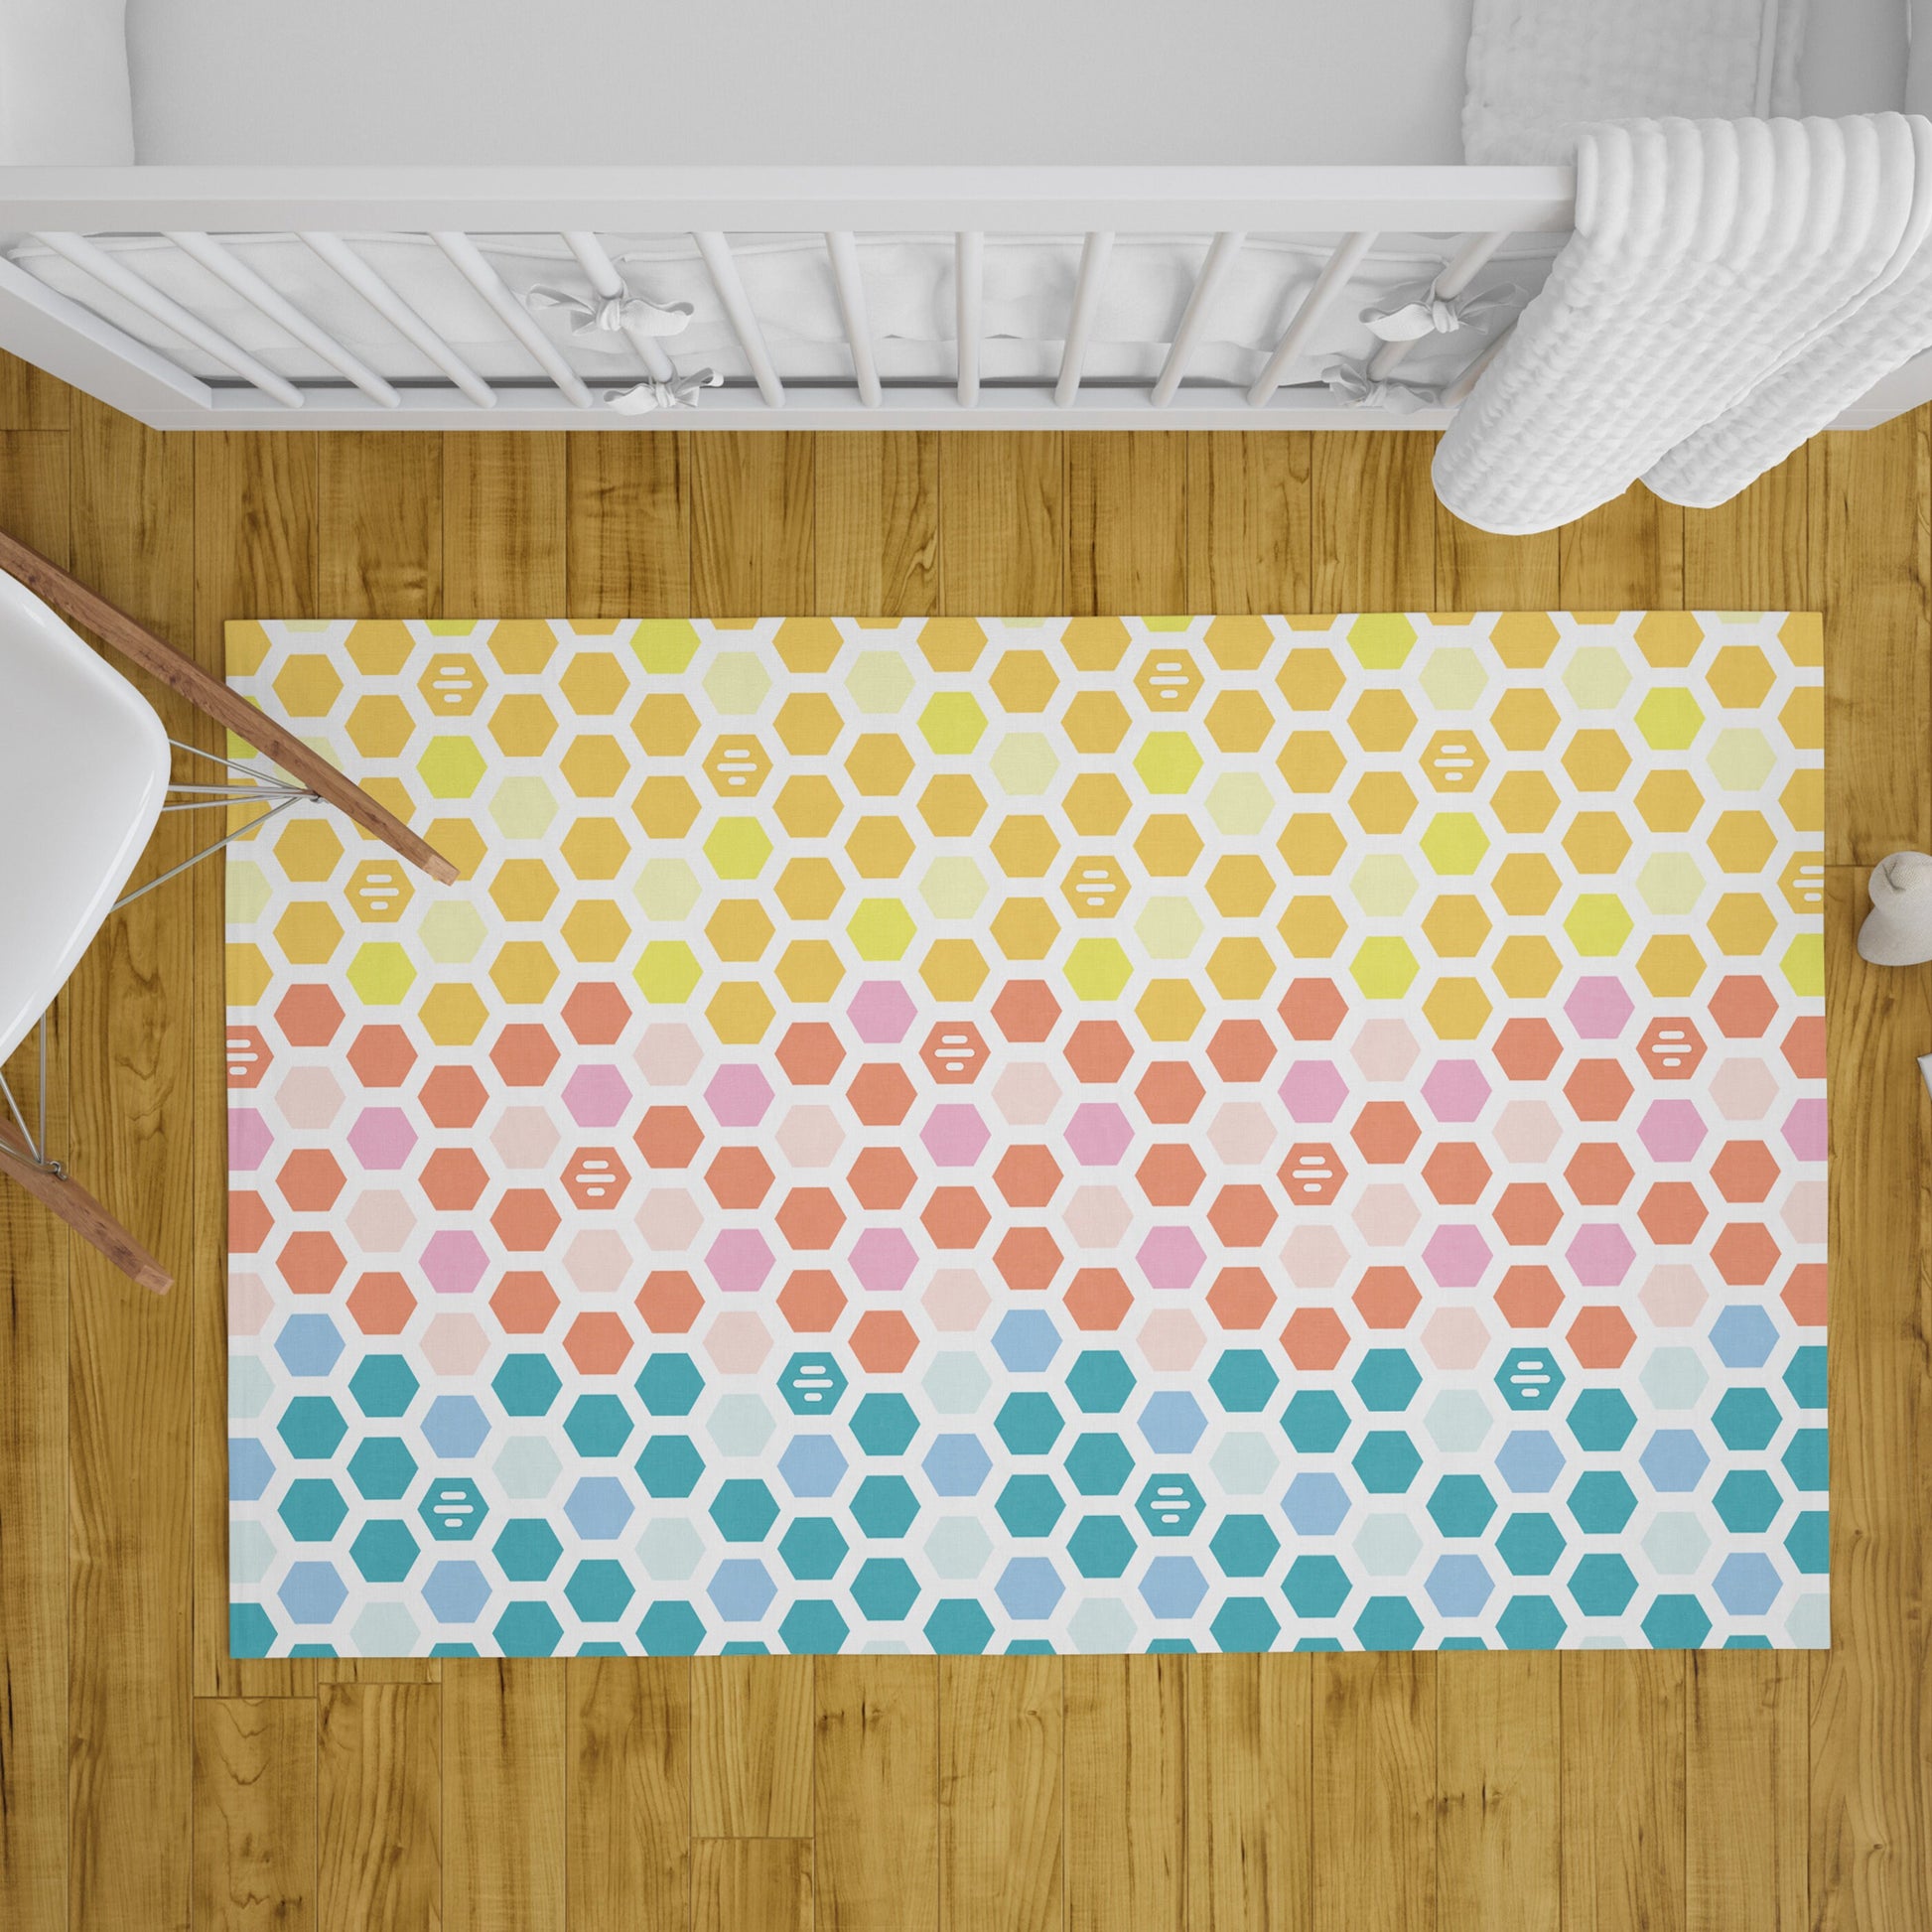 Colorful Hexagons Rug Rug 3'x5' 4'x6' 5'x7' 8x10' 9x12' Large orange pink yellow blue area rug